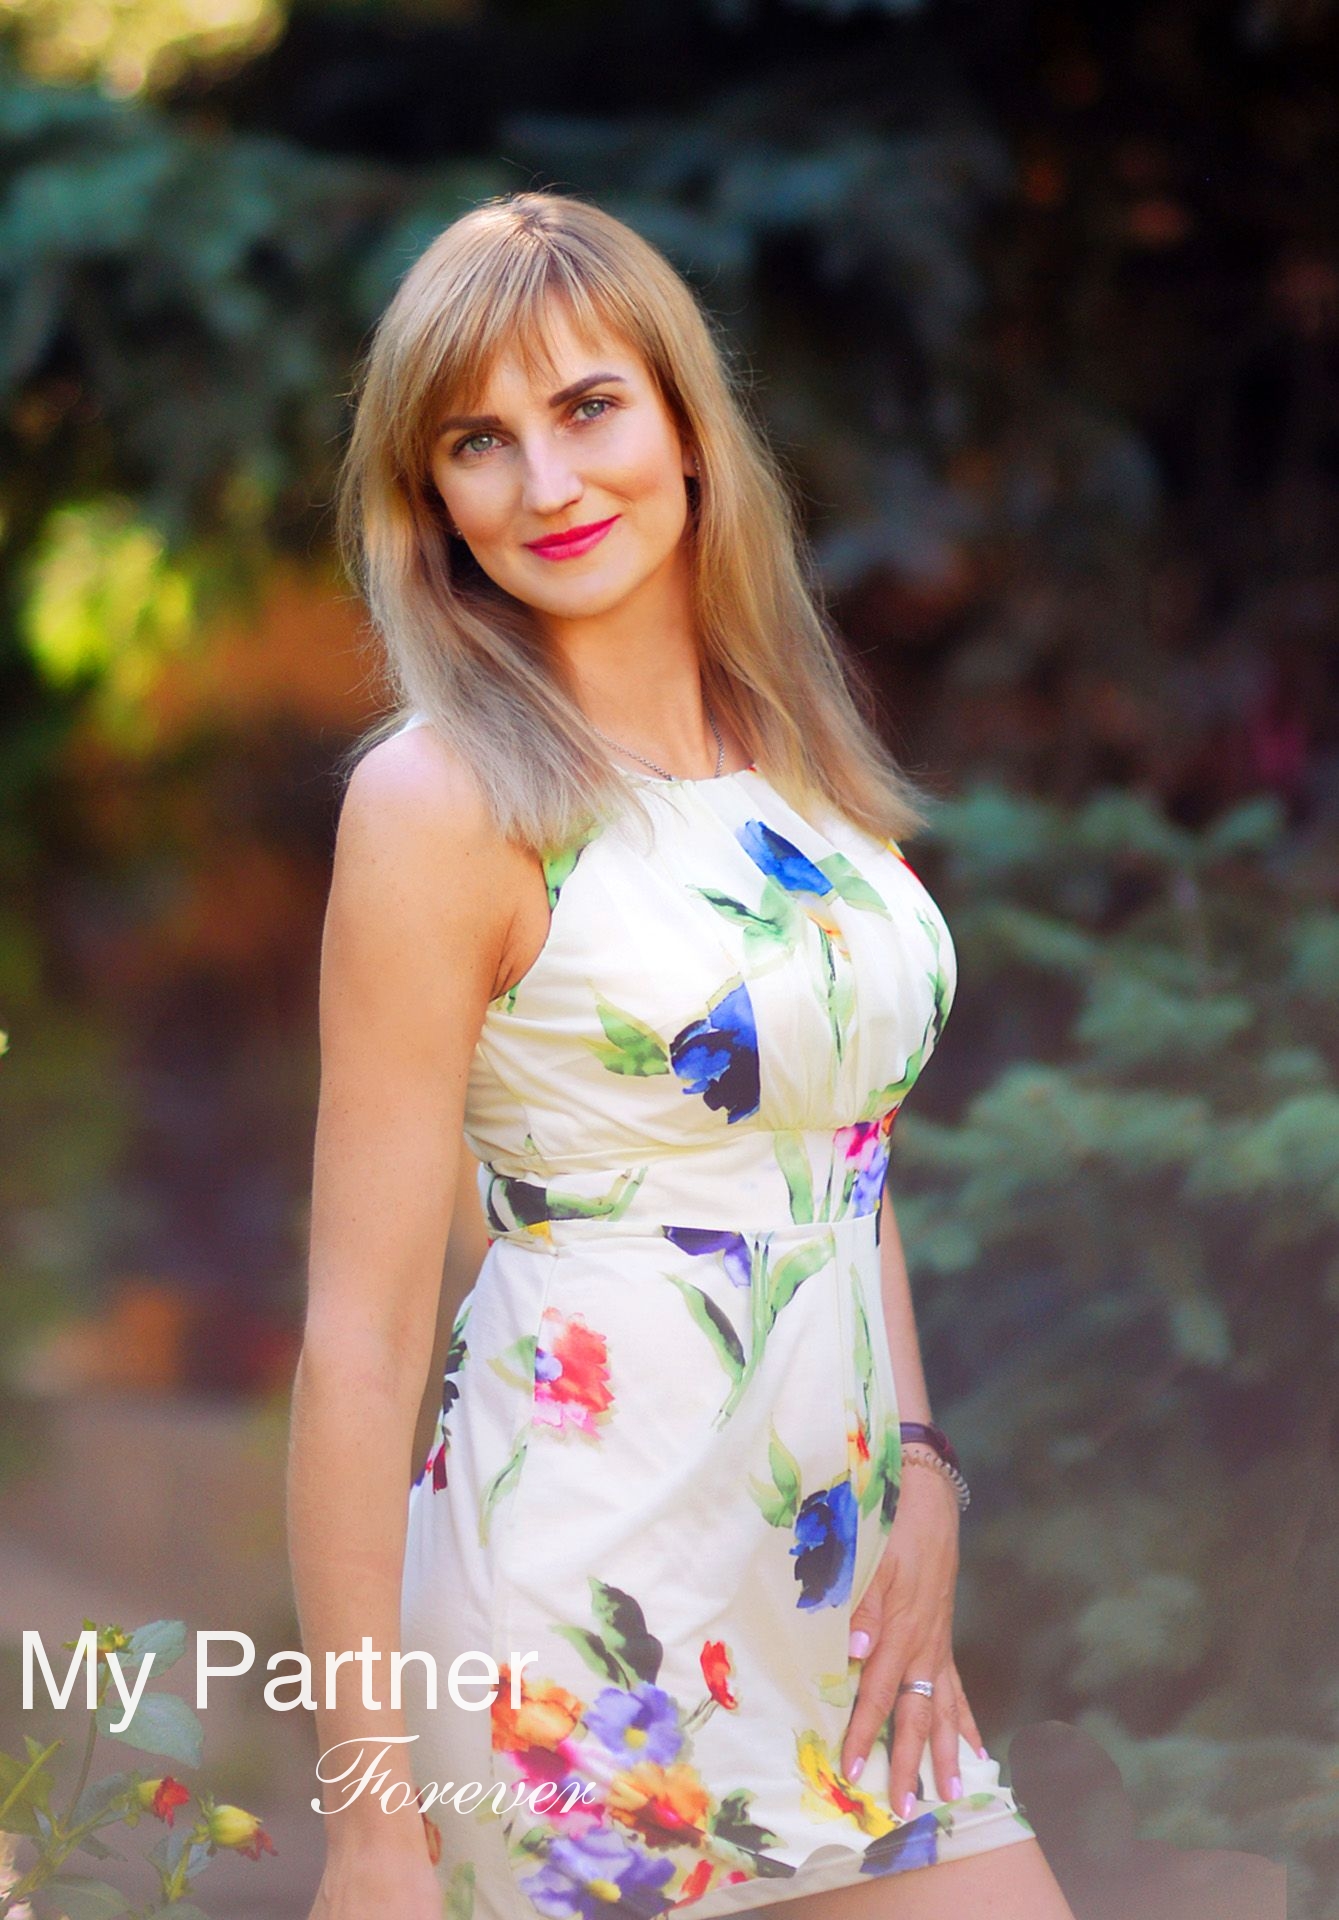 Dating Site to Meet Pretty Ukrainian Lady Irina from Kharkov, Ukraine